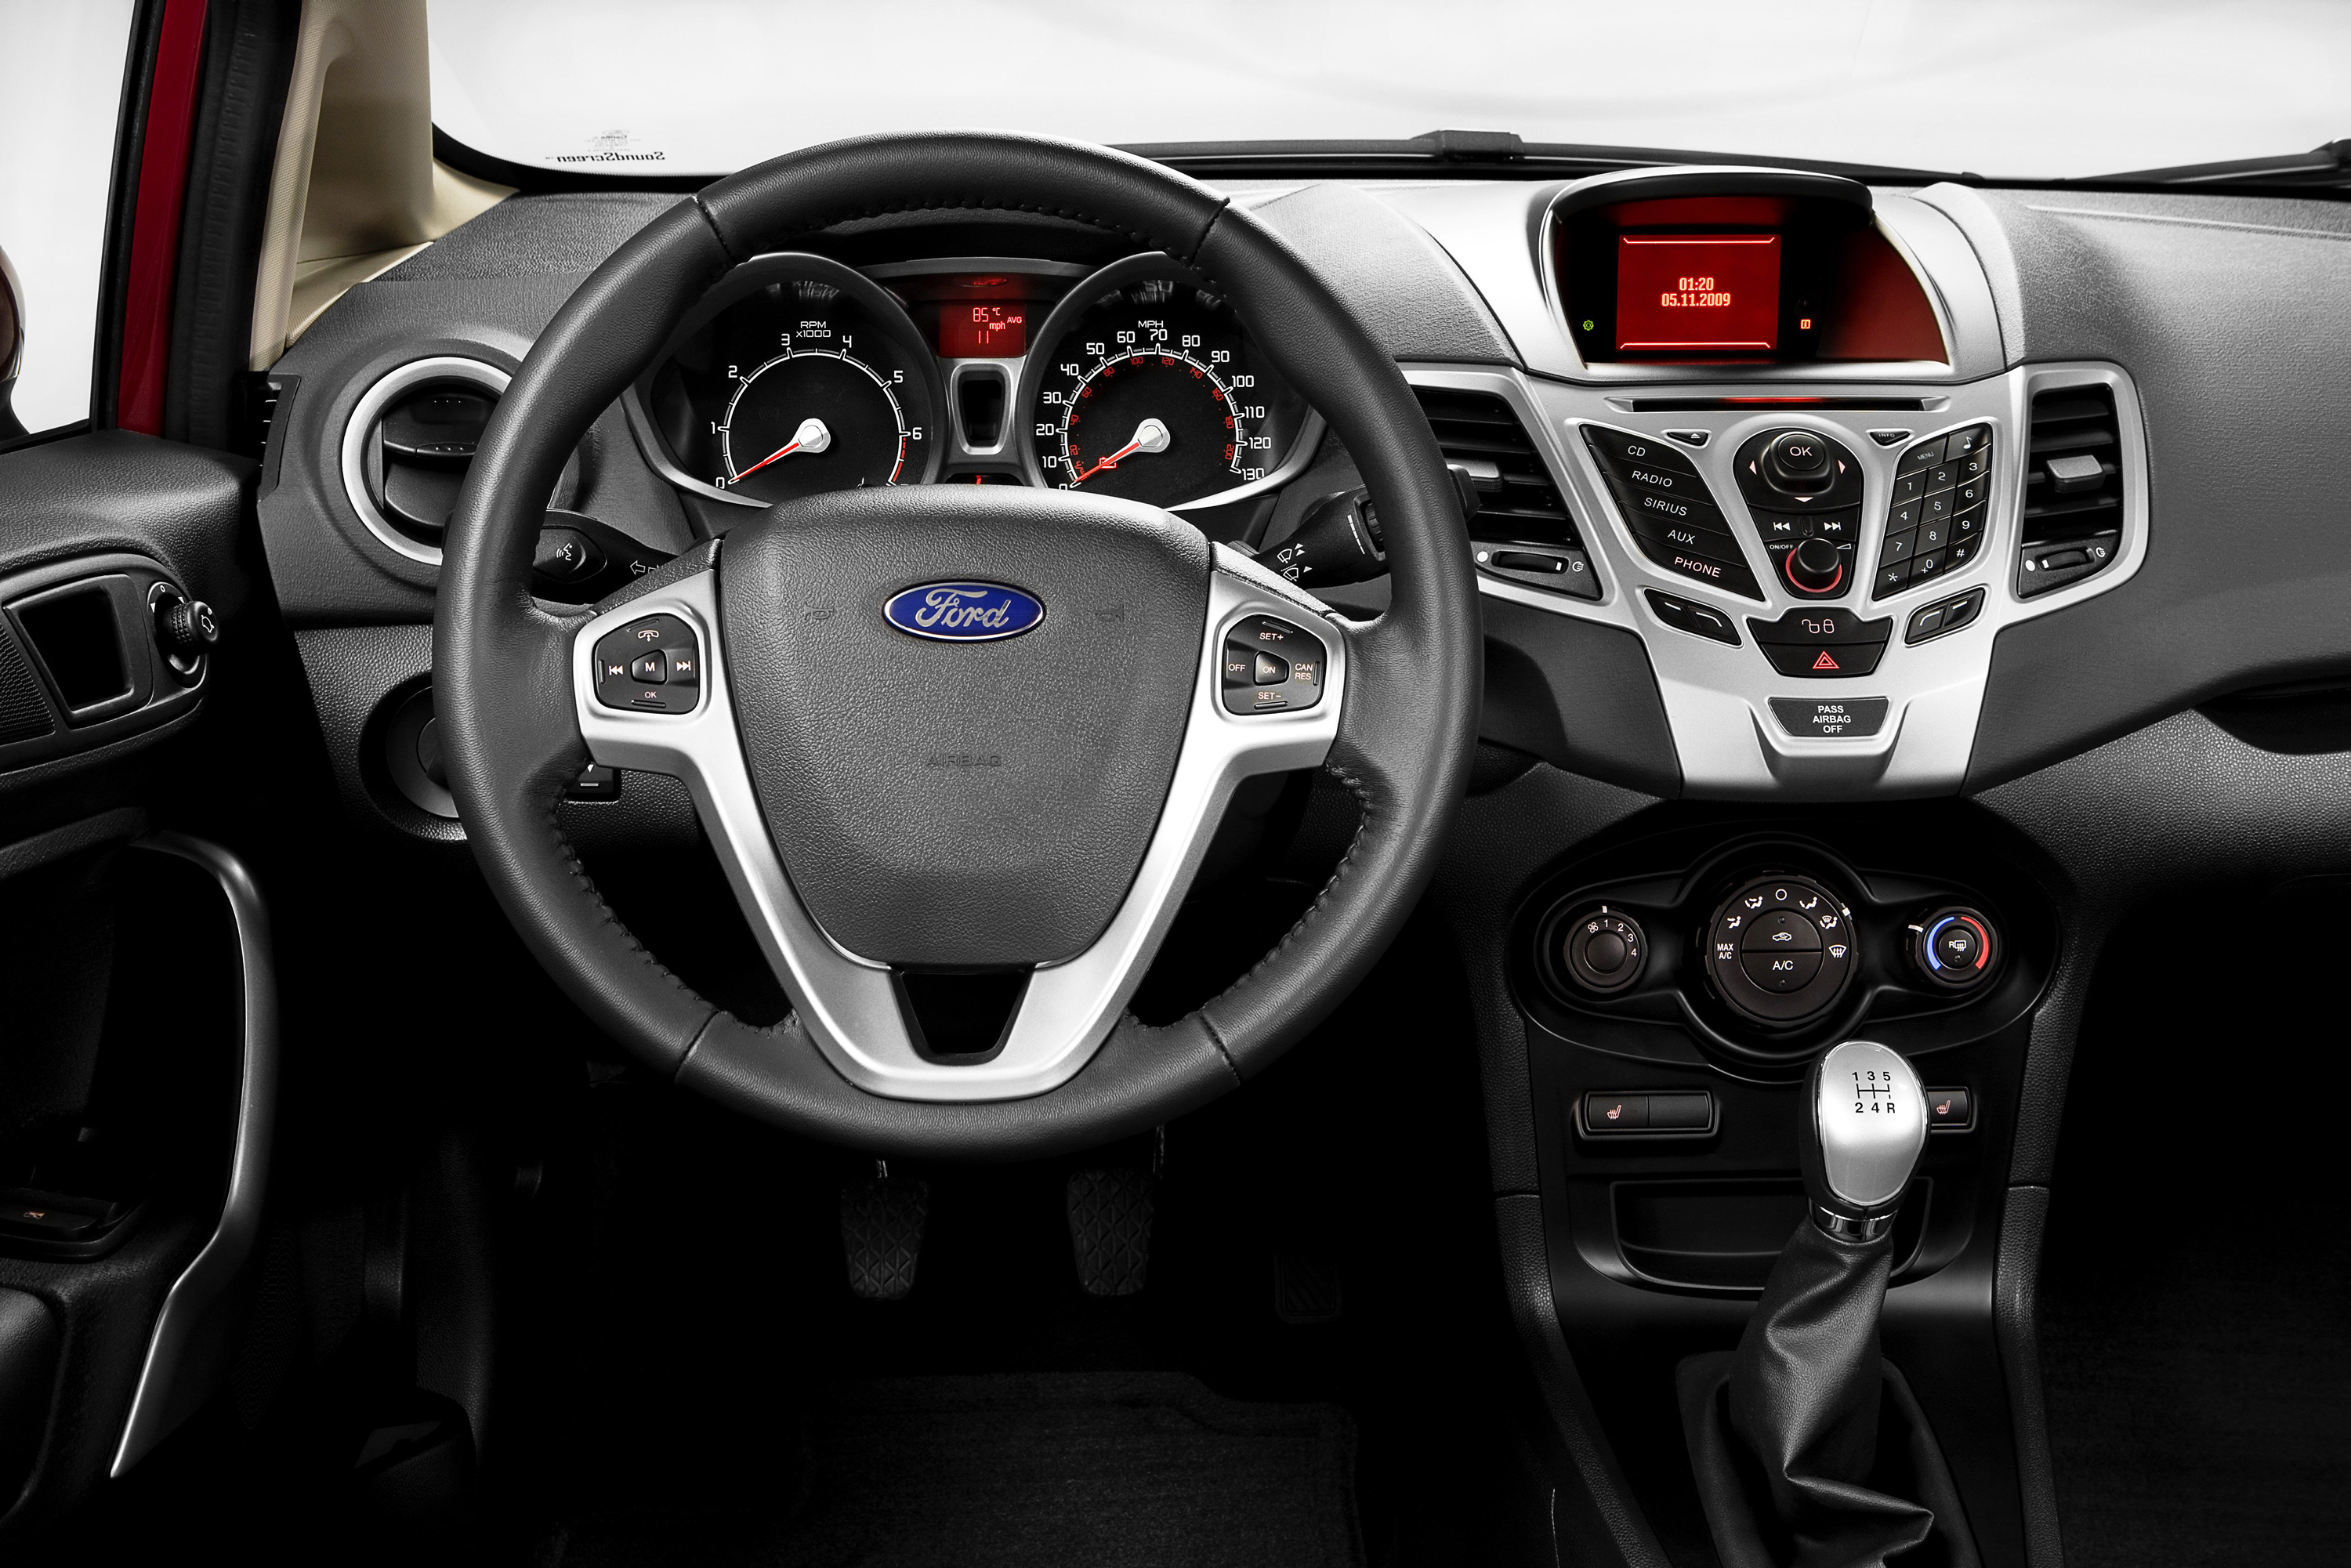 Ford Fiesta Sedan hd specifications